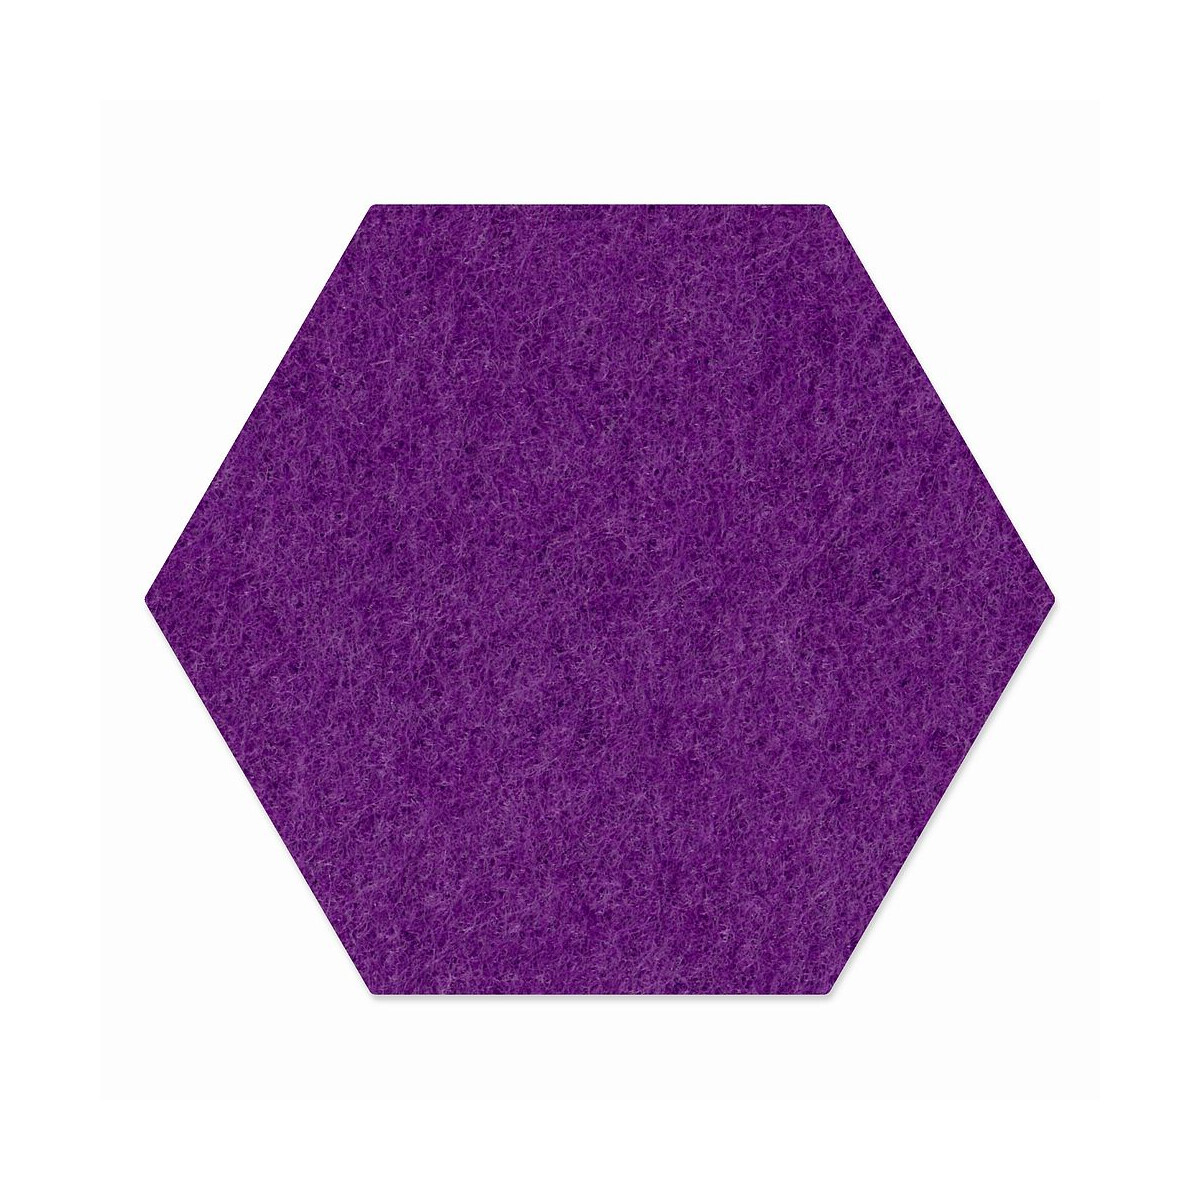 1 x FILZ Untersetzer Wabe, Hexagon 11 cm - lila